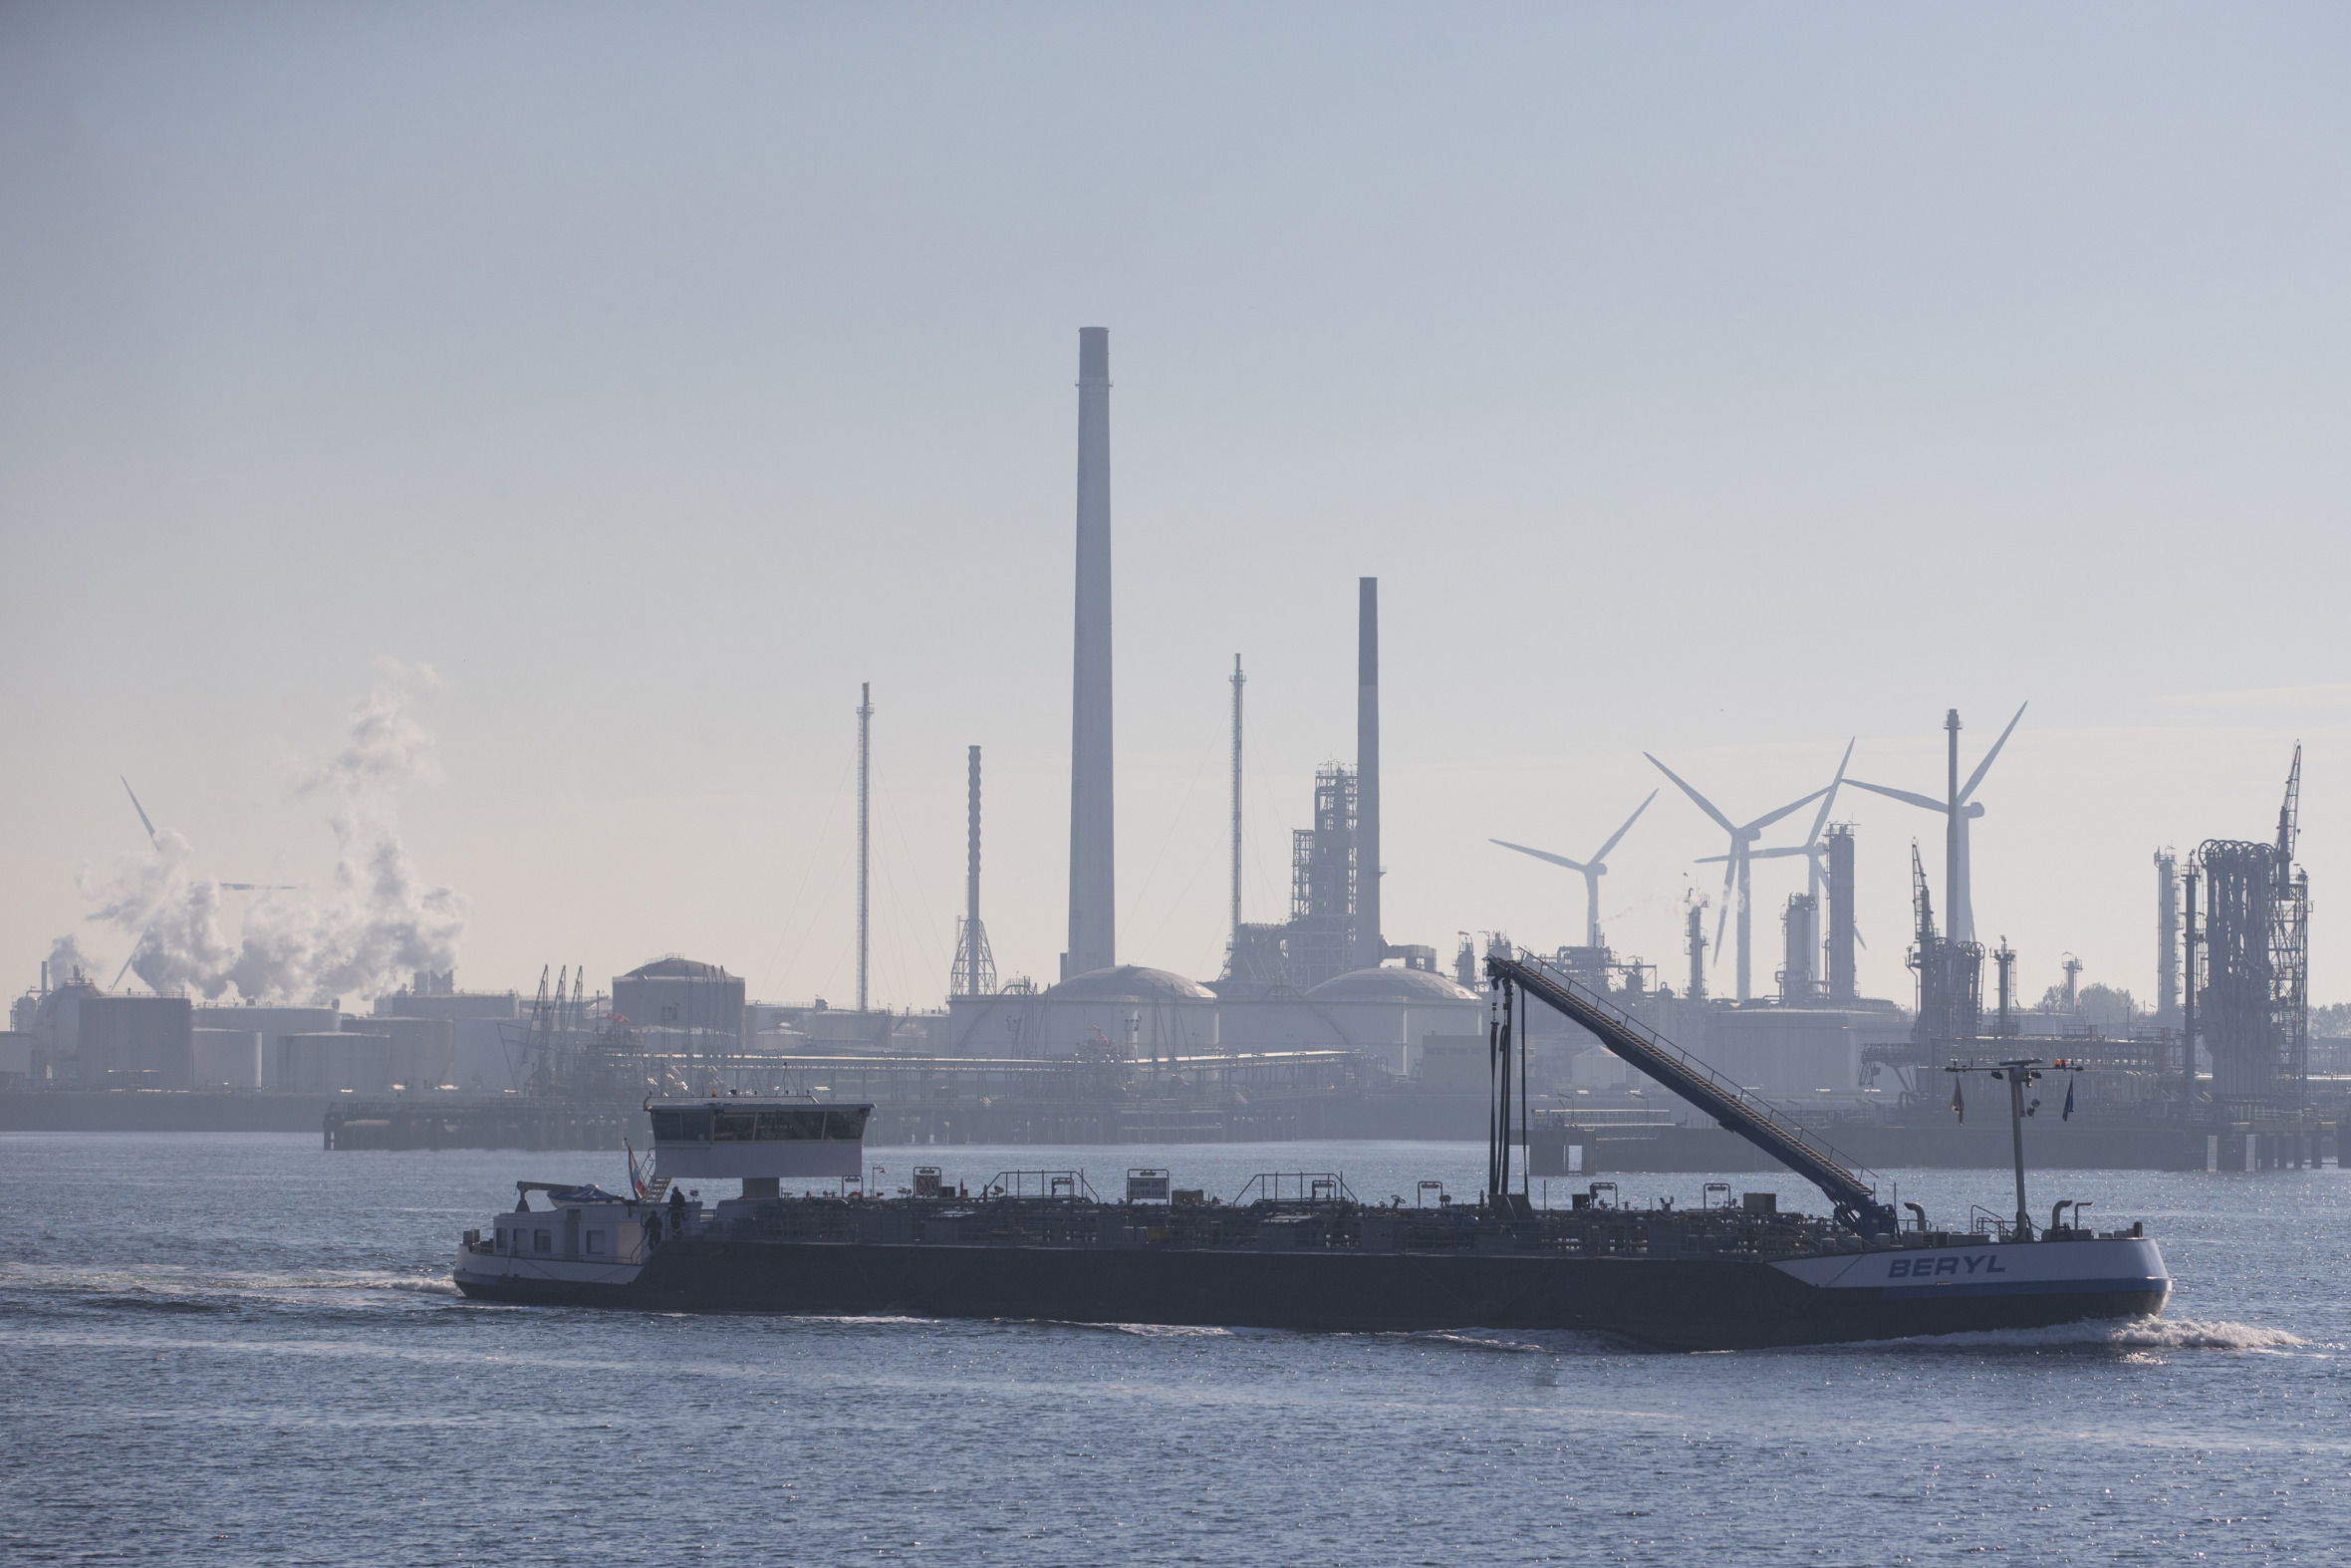 Port of Rotterdam, Netherlands. Photographer: